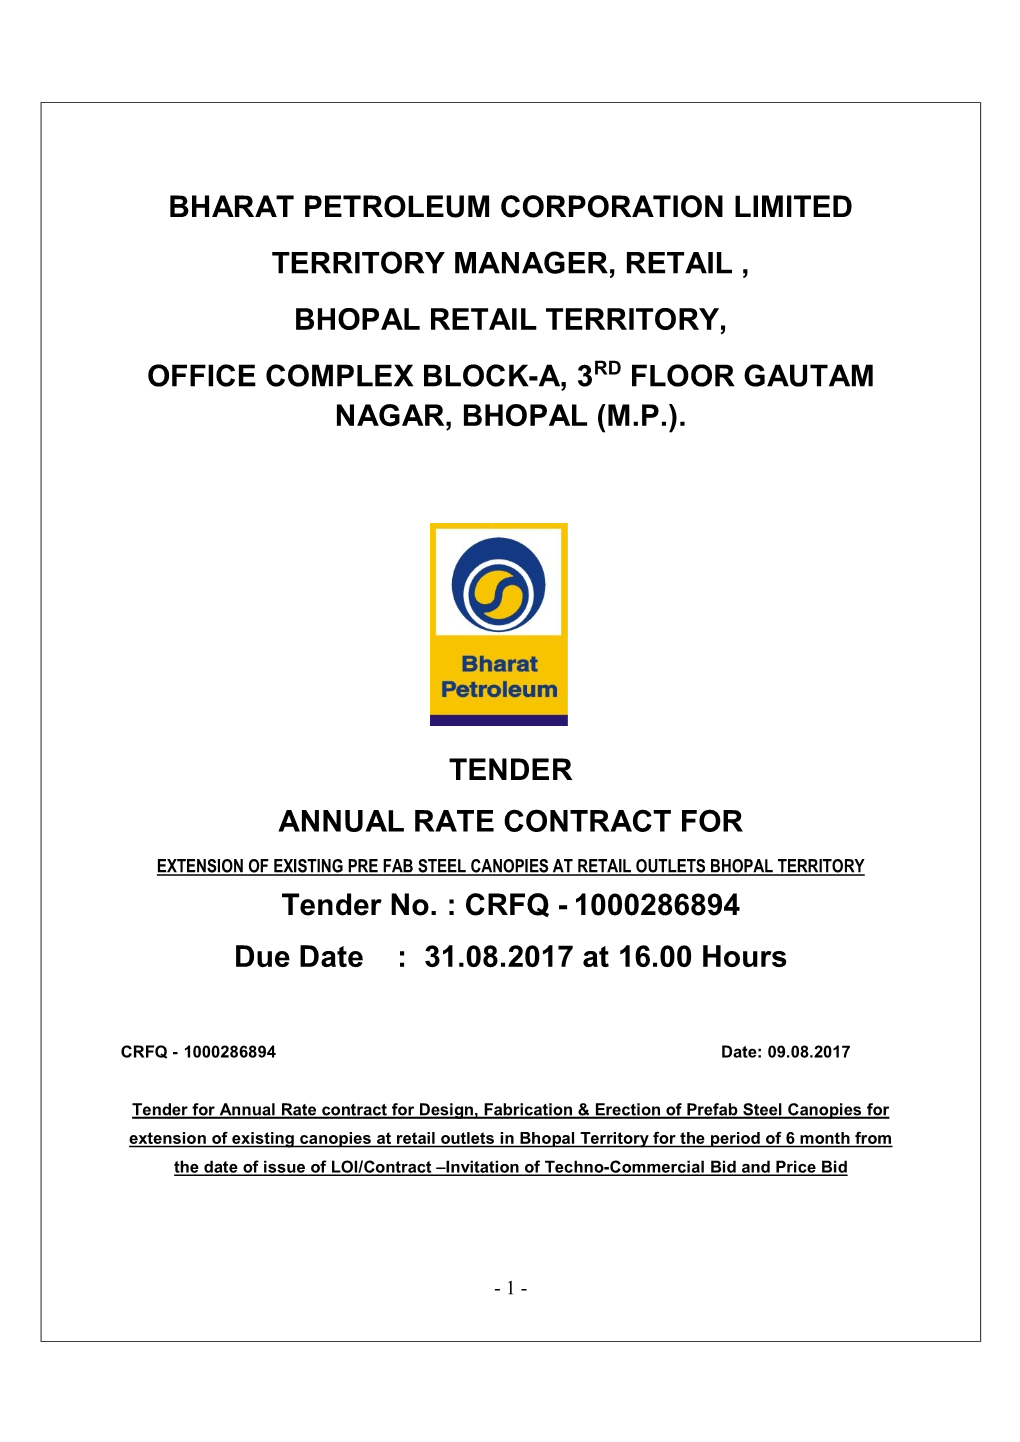 Bharat Petroleum Corporation Limited Territory Manager, Retail , Bhopal Retail Territory, Office Complex Block-A, 3Rd Floor Gautam Nagar, Bhopal (M.P.)